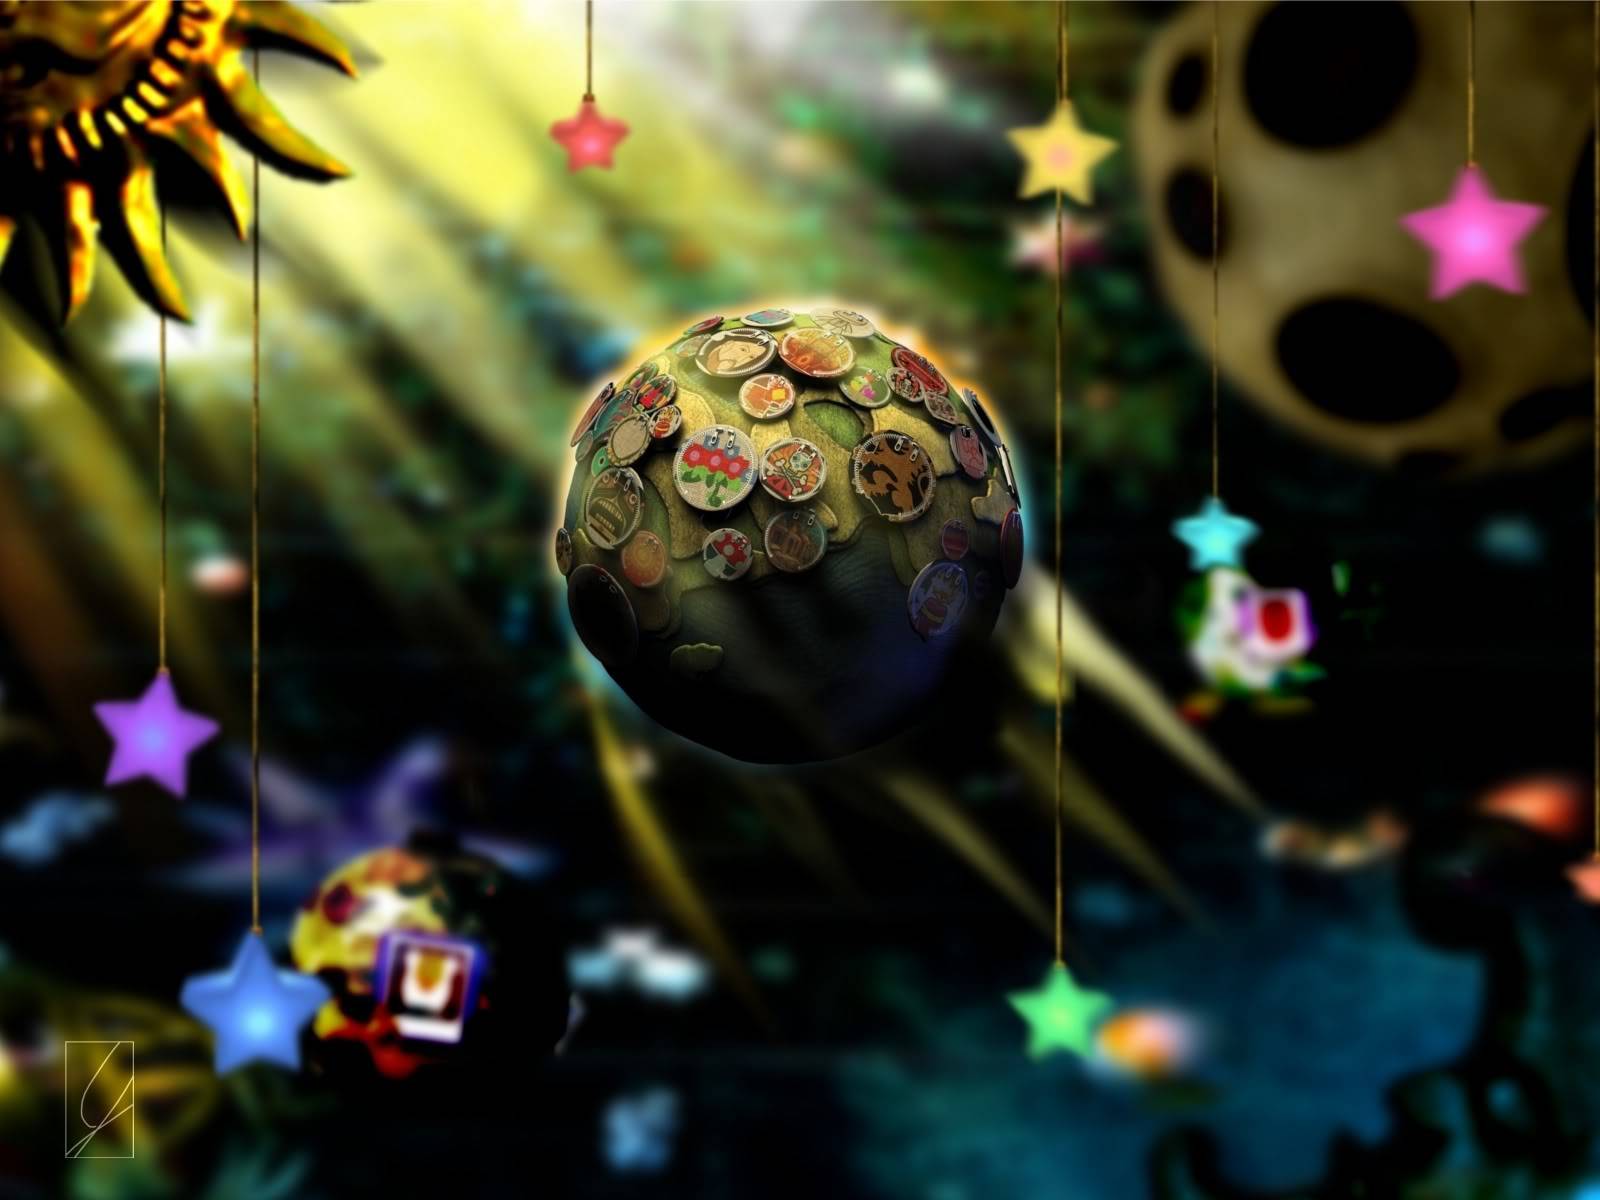 LittleBigPlanet Background